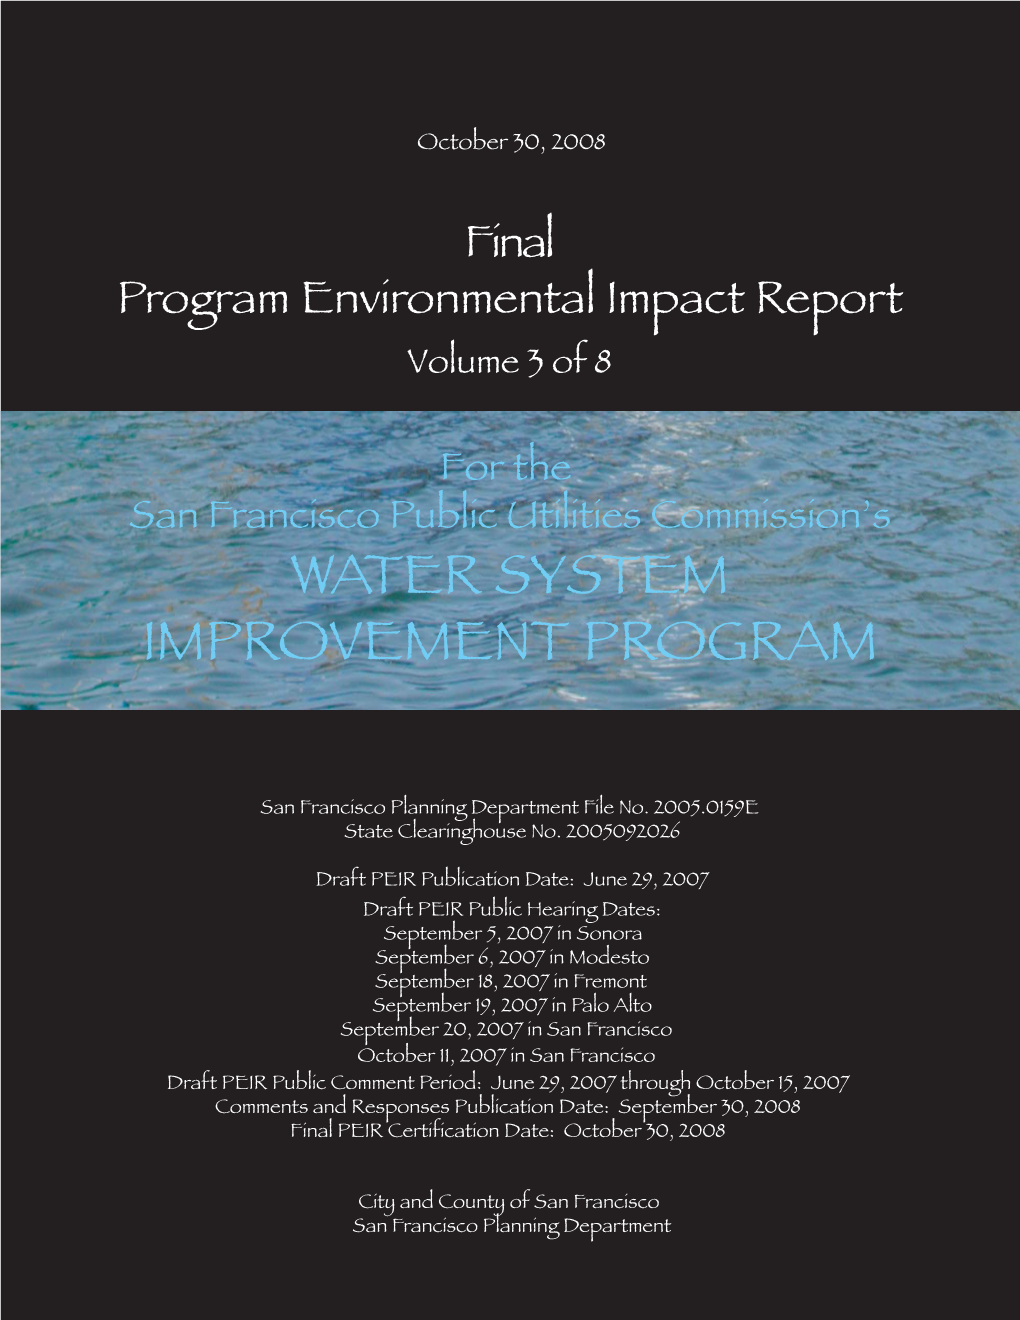 Water System Improvement Program